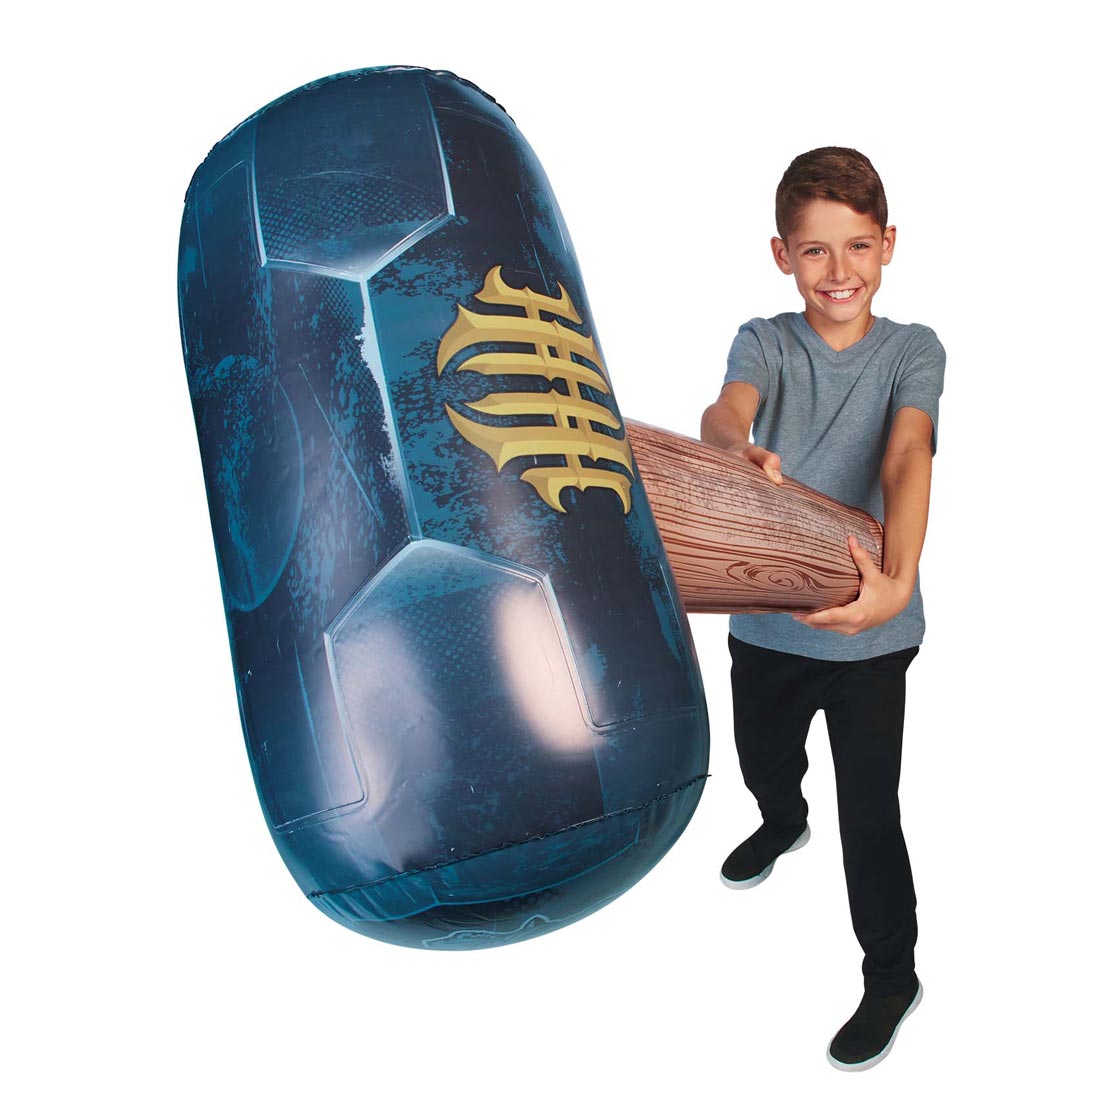 WWE big bash Sledgehammer Inflatable